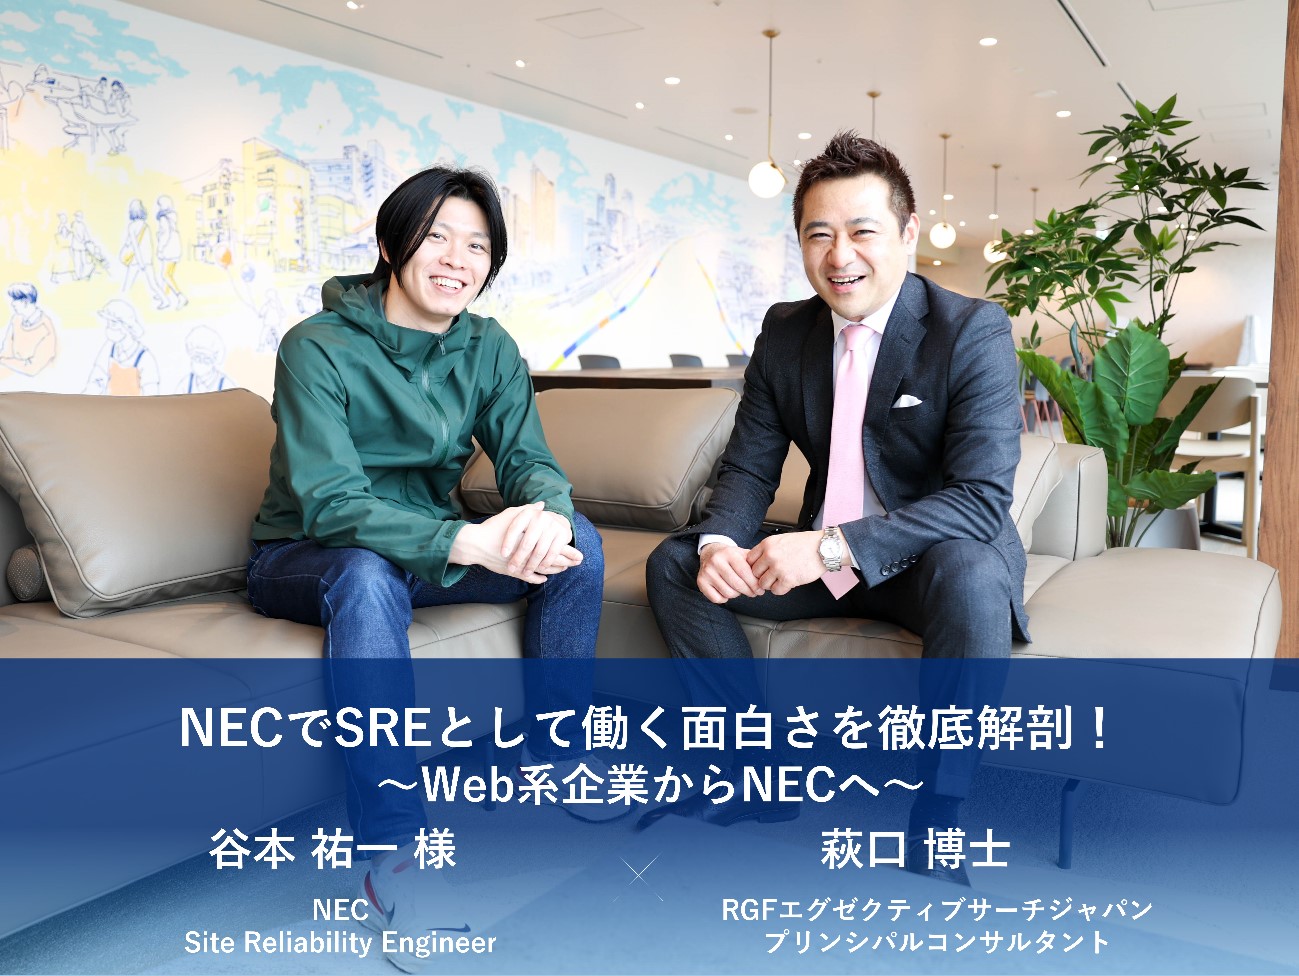 ES Japan and NEC